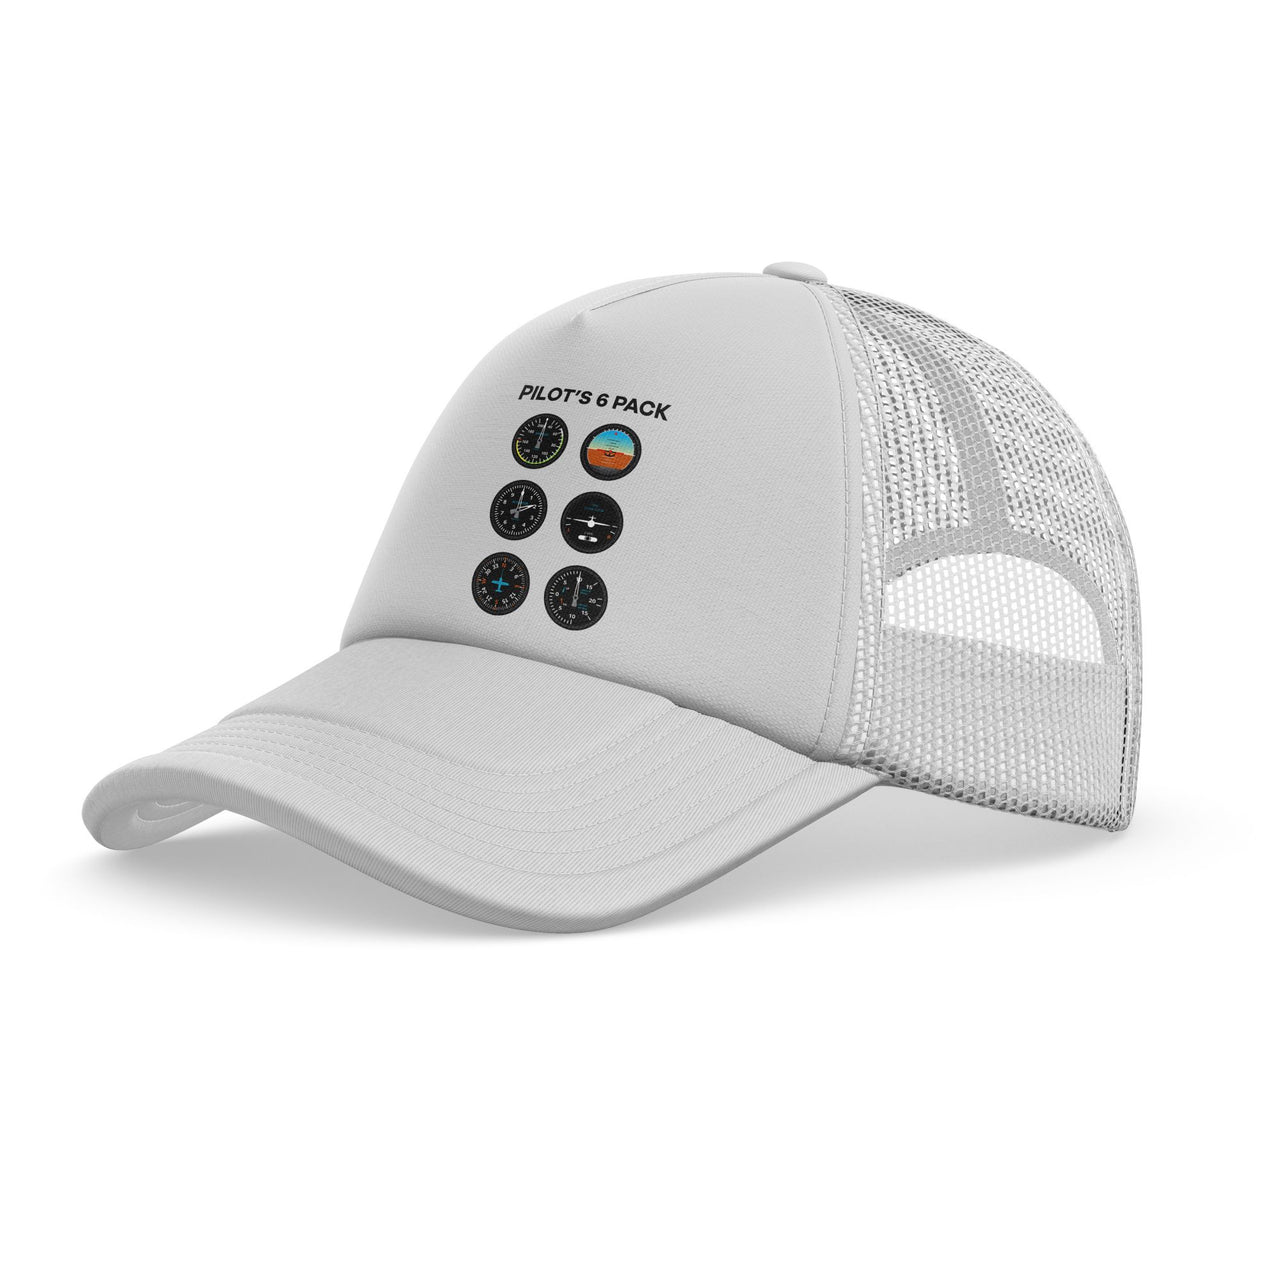 Pilot's 6 Pack Designed Trucker Caps & Hats